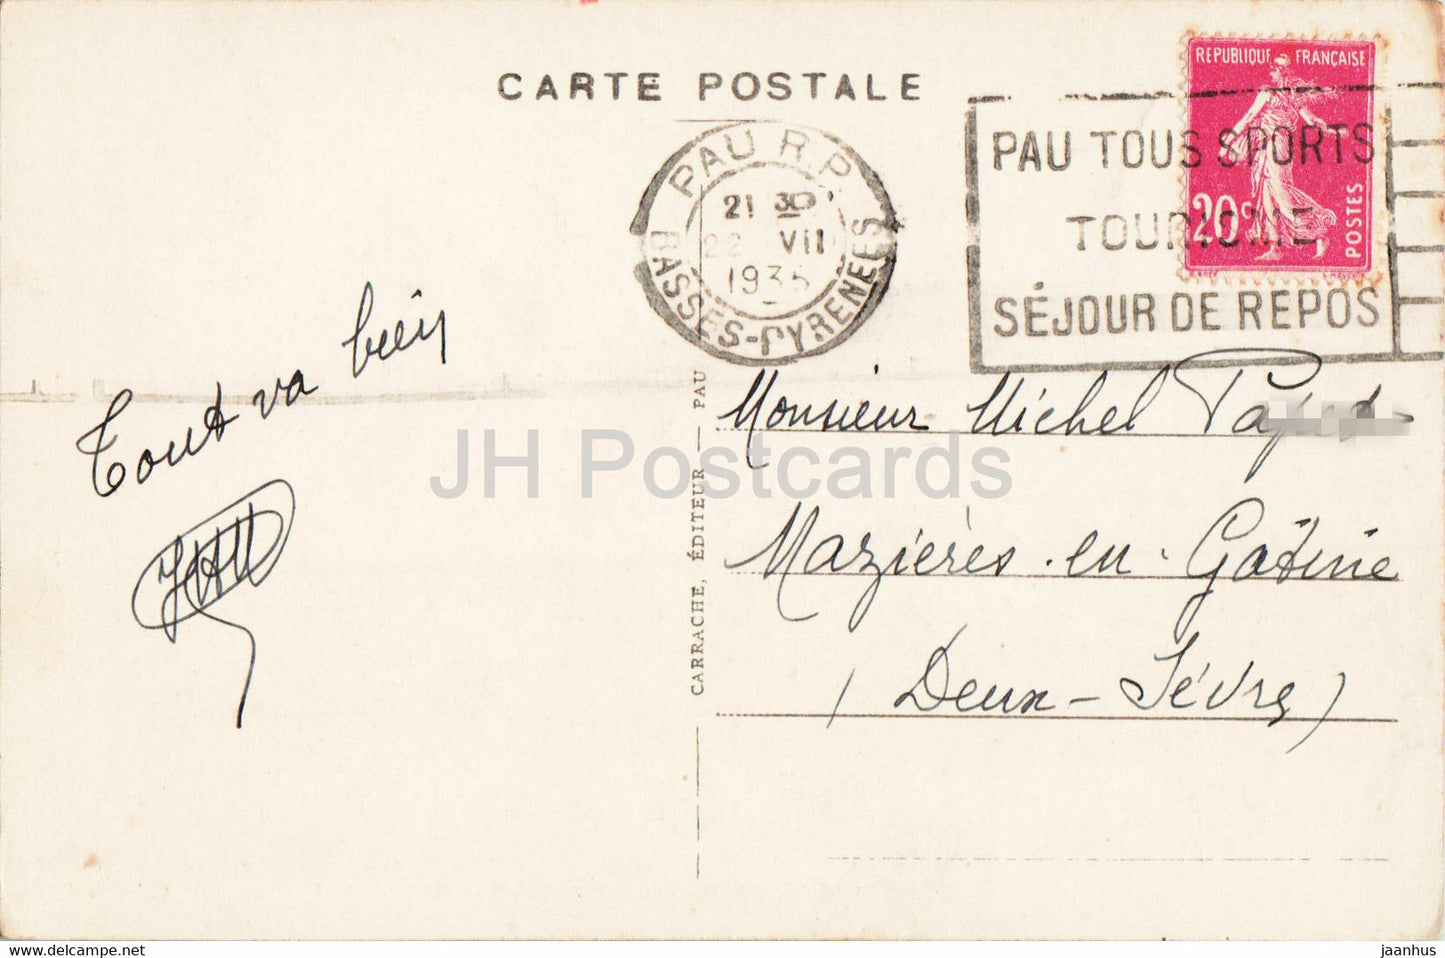 Pau - Le Chateau - Fassade Principale - 1 - Schloss - alte Postkarte - 1935 - Frankreich - gebraucht